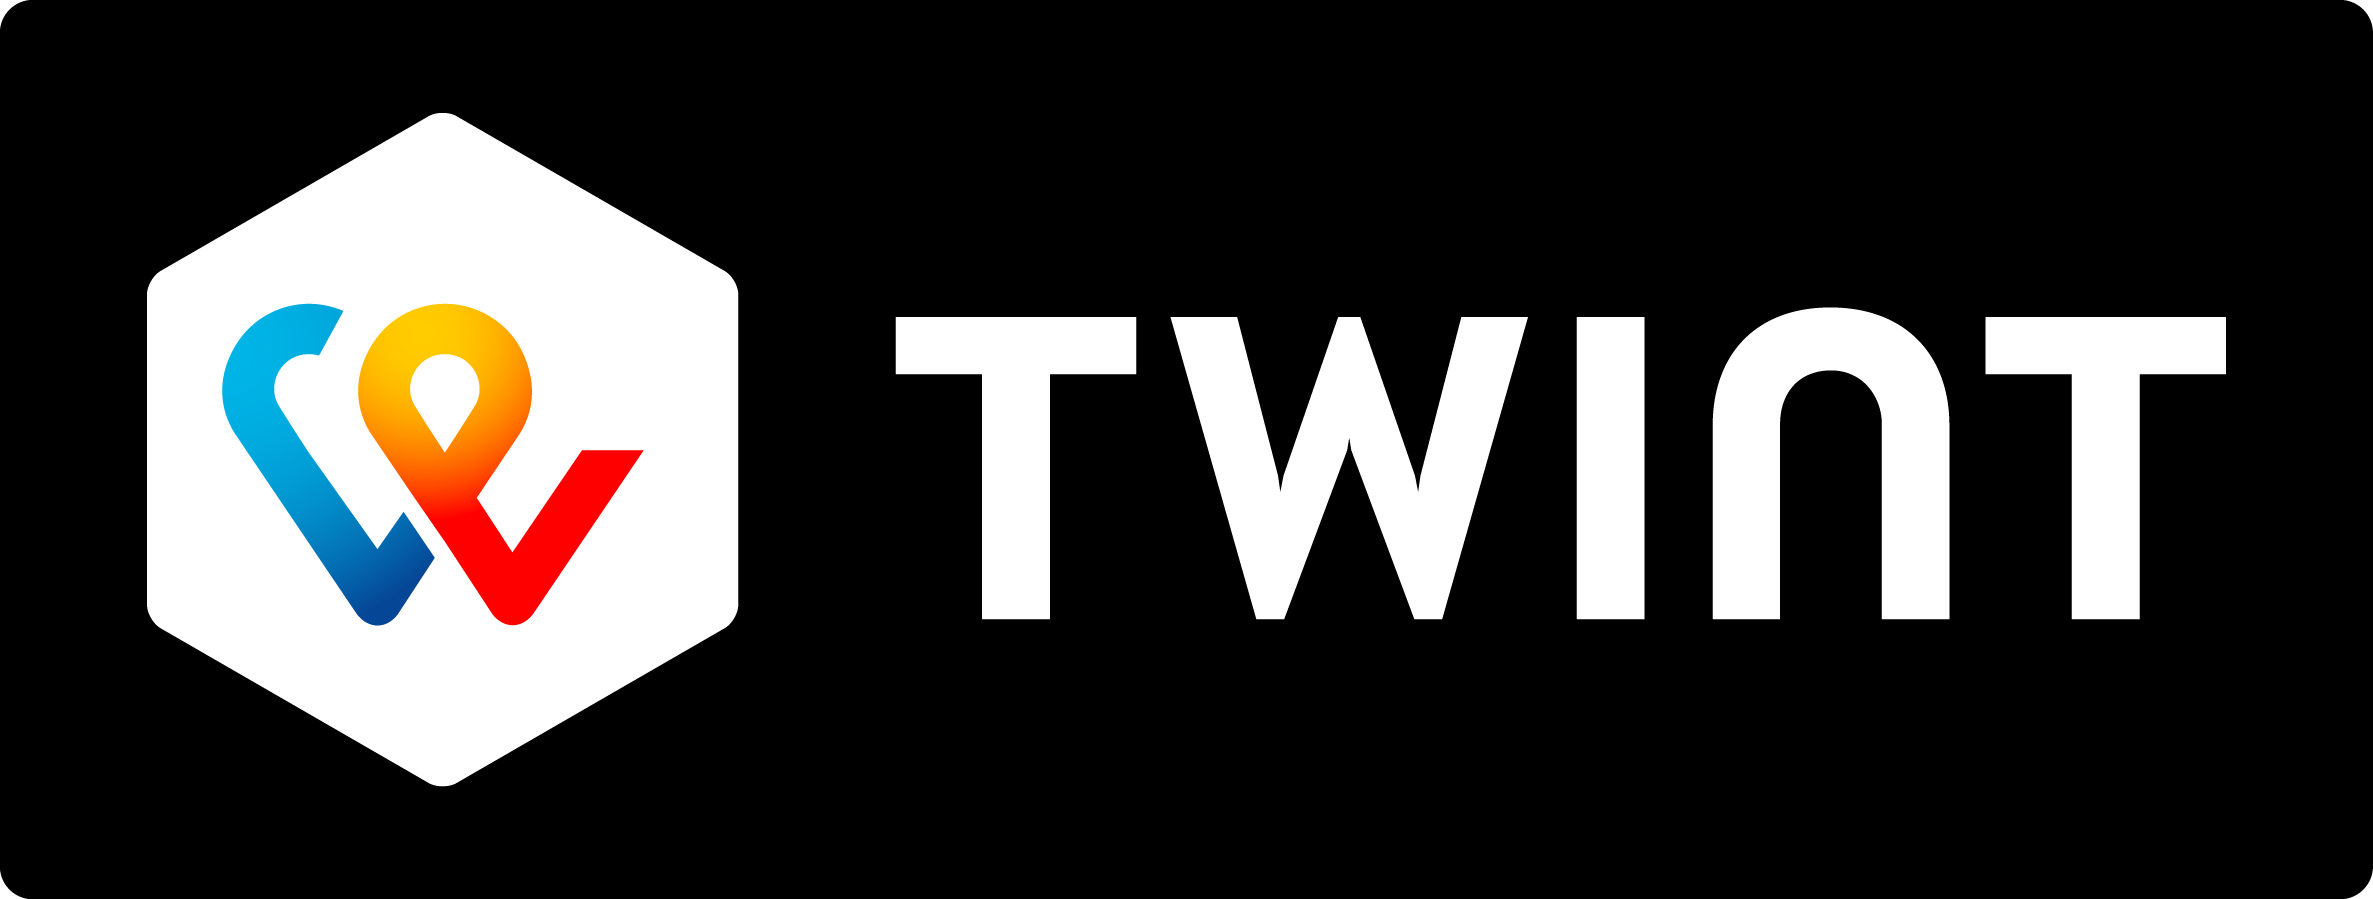 twint logo